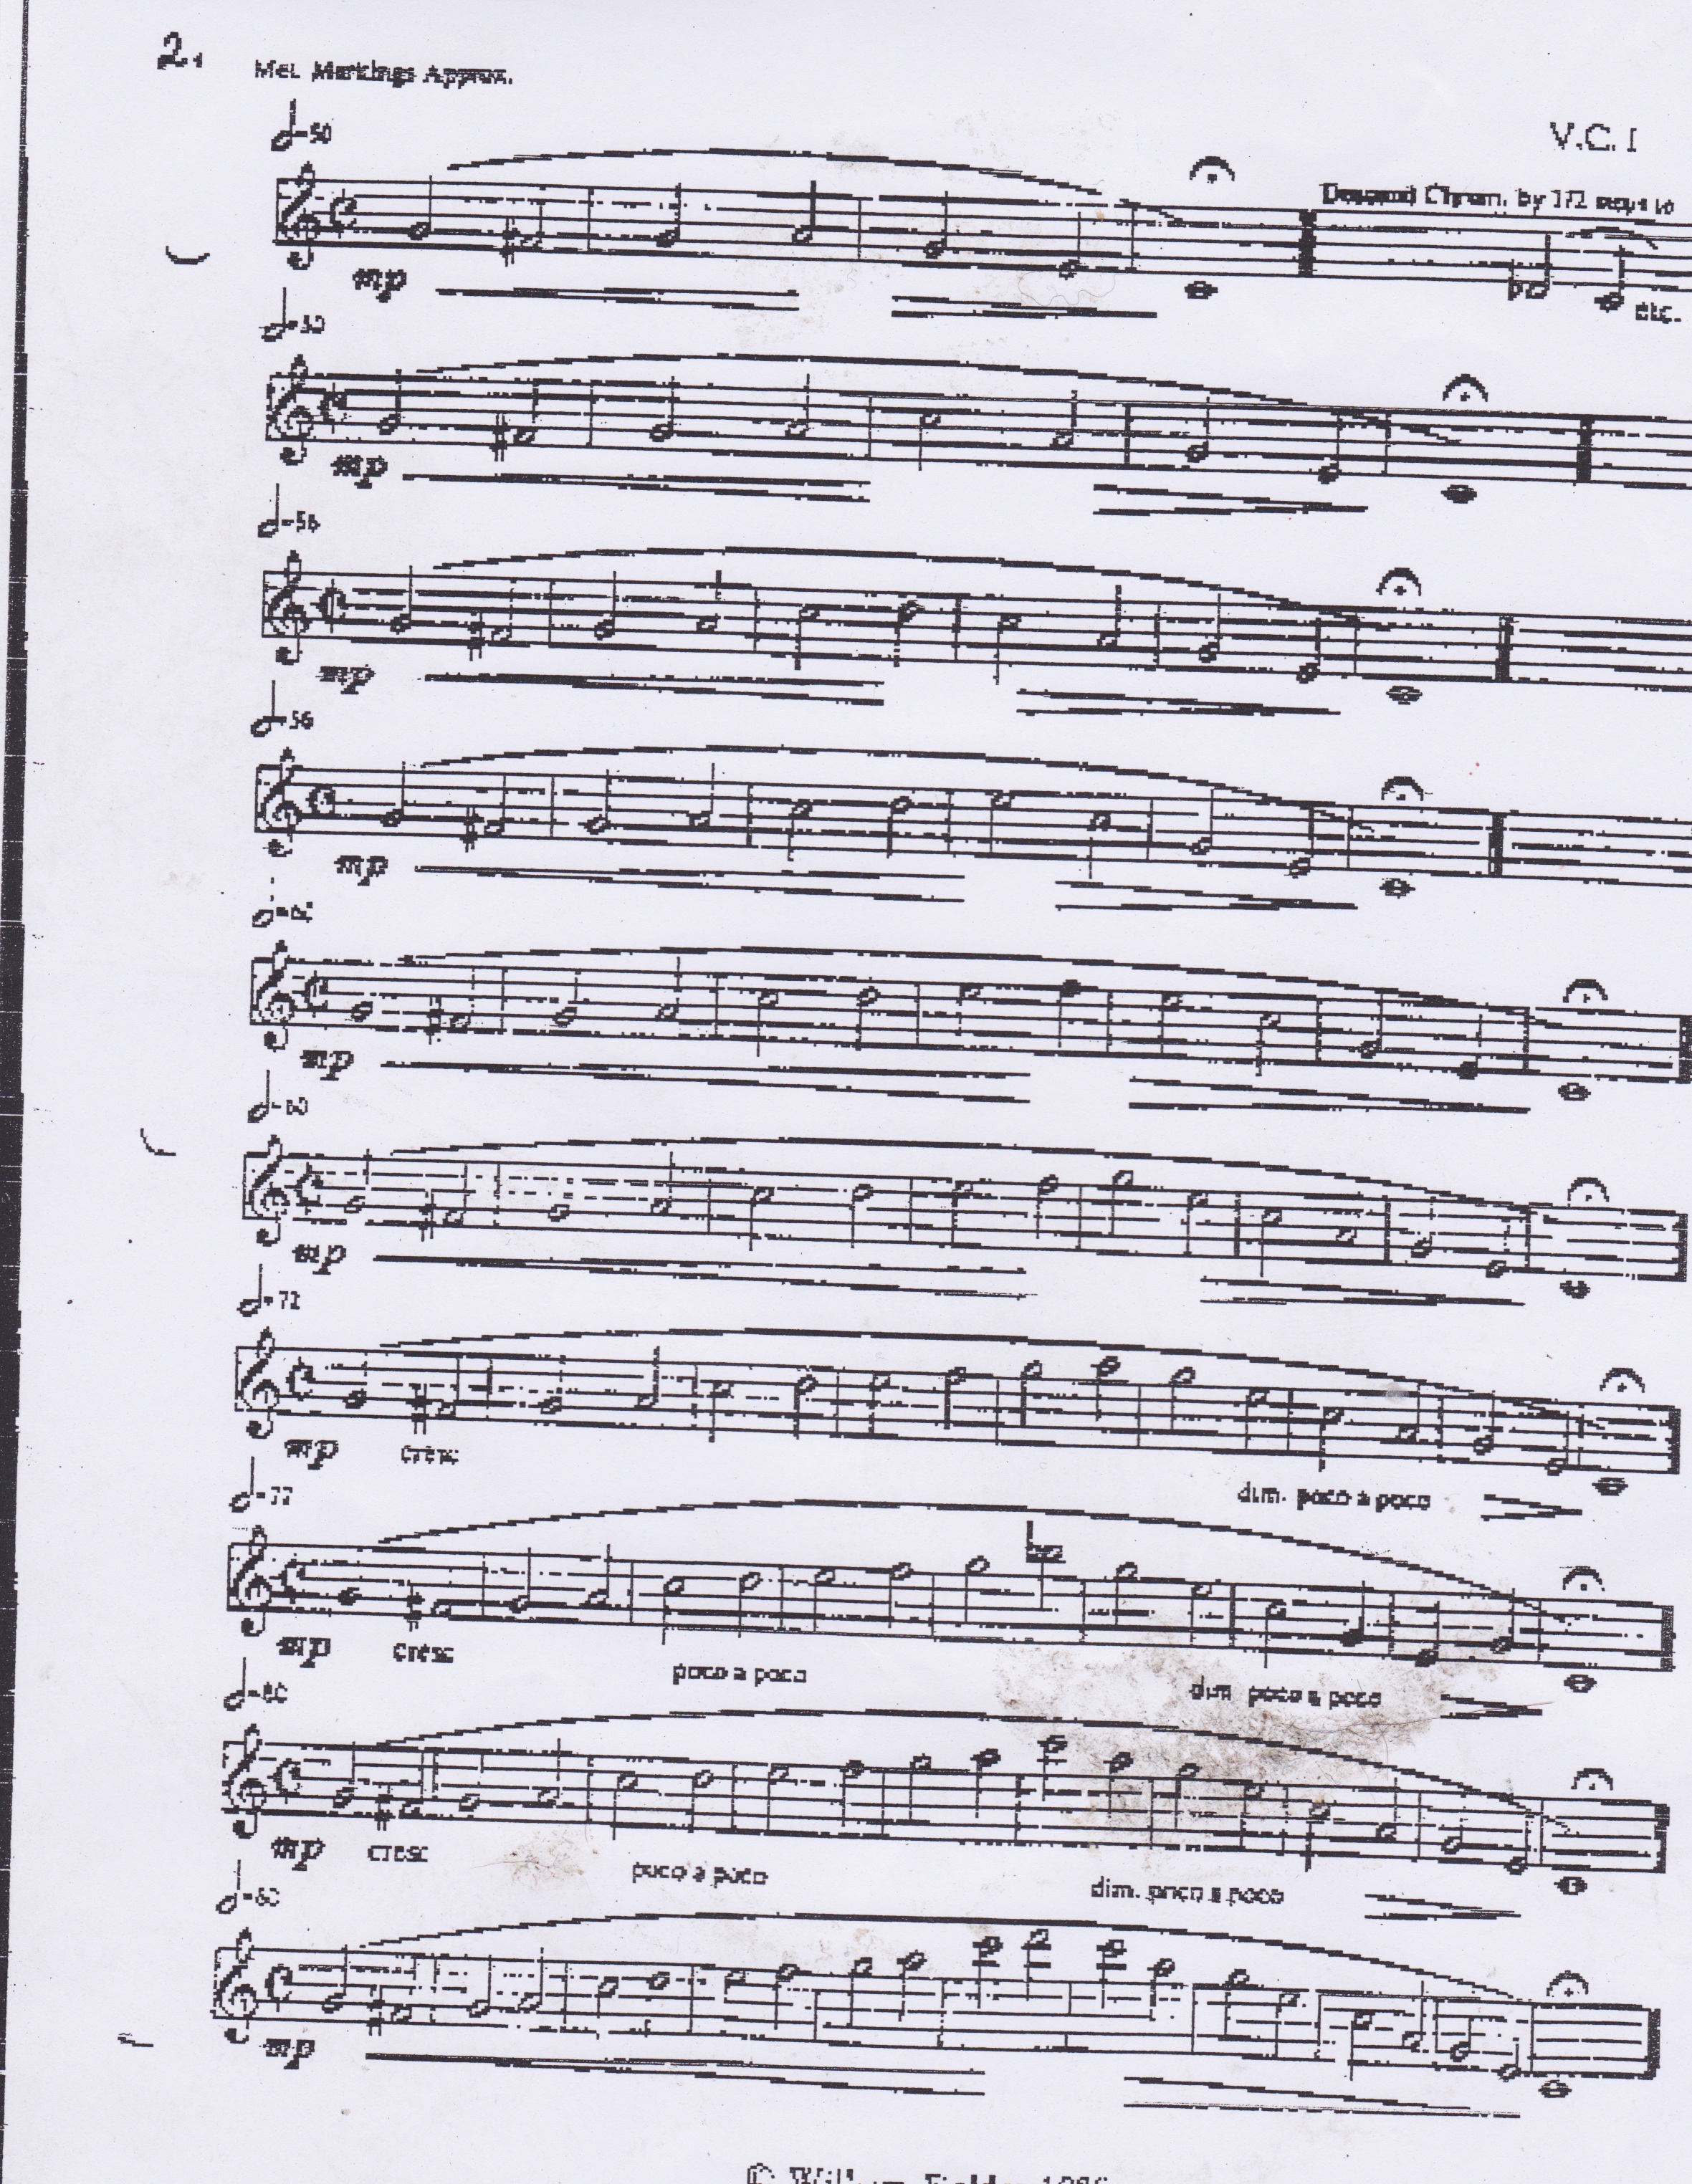 Cichowicz Trumpet Flow Studies Pdf Reader